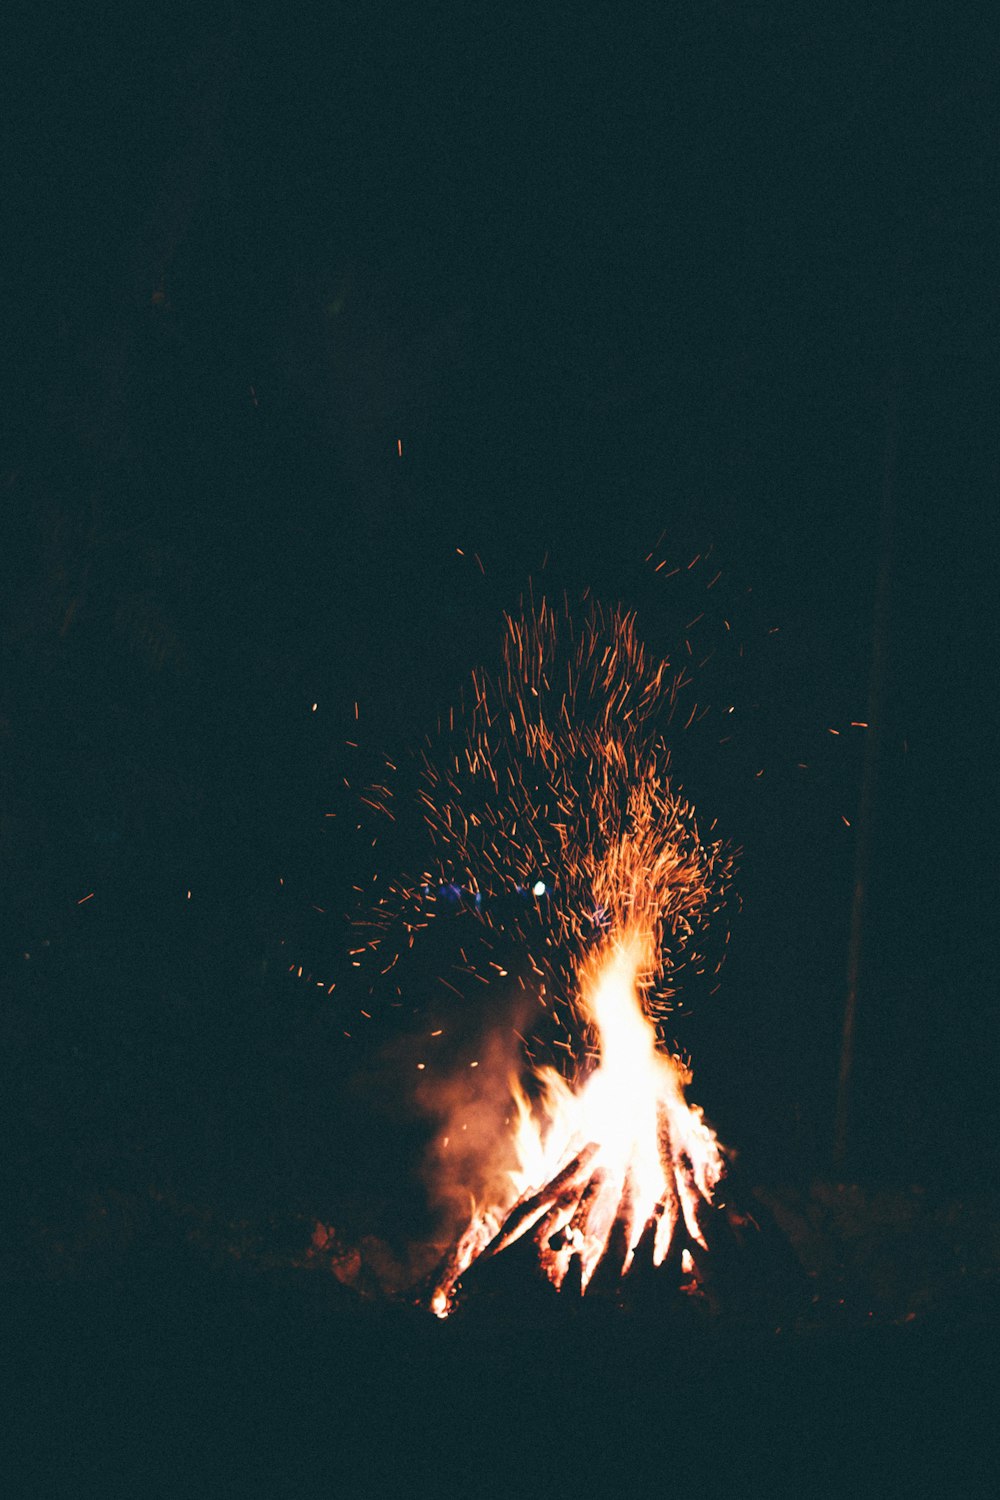 bonfire photo during nighttime